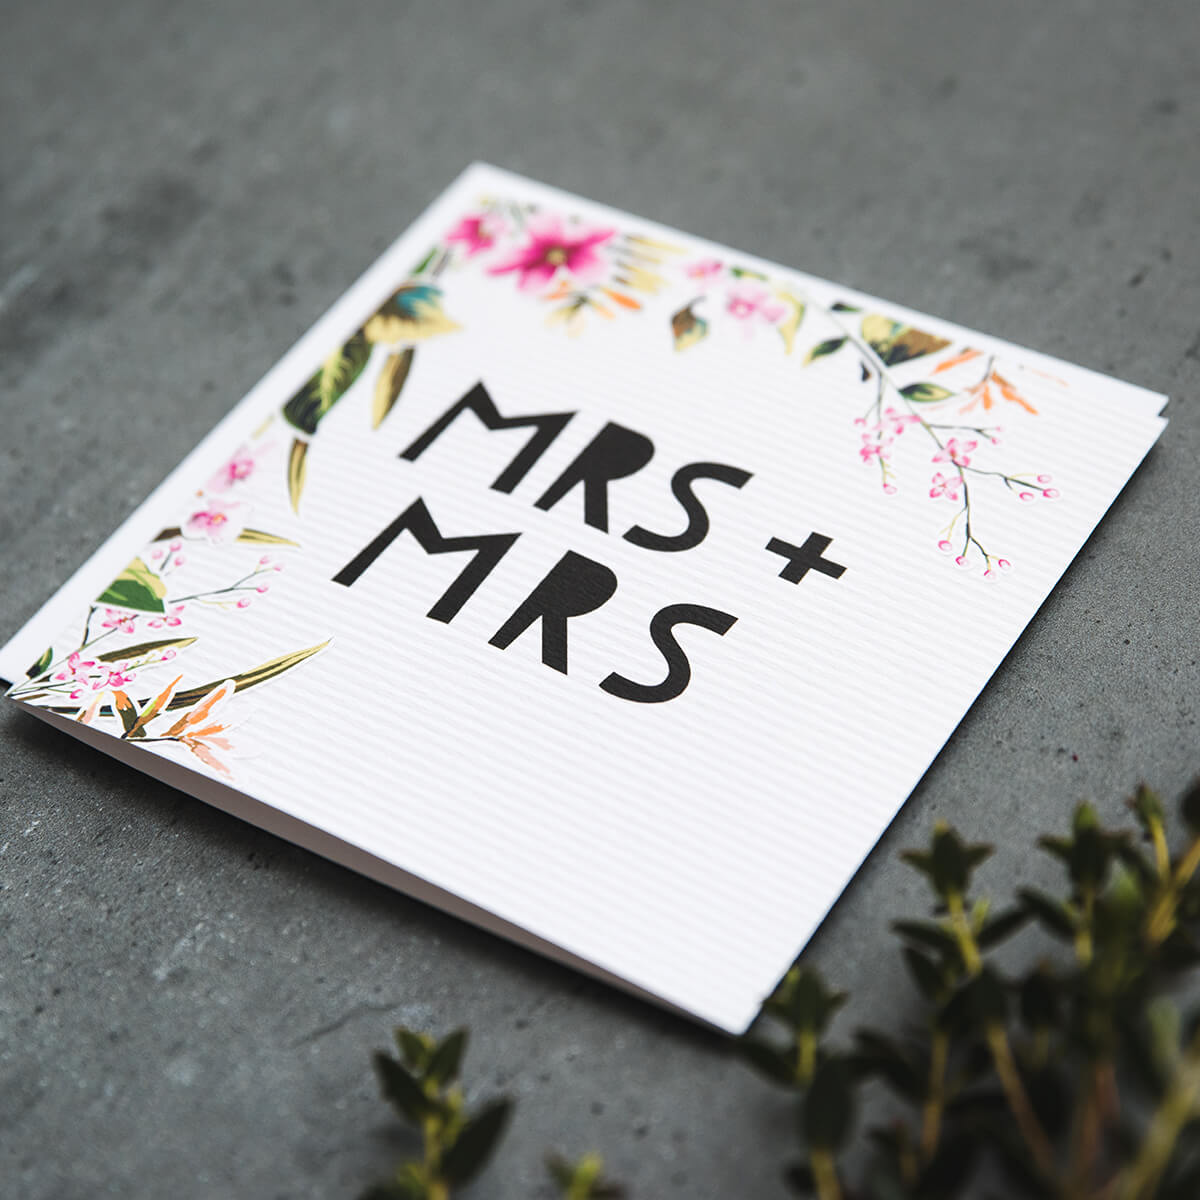 'Mrs + Mrs' Gay Wedding Card - I am Nat Ltd - Greeting Card